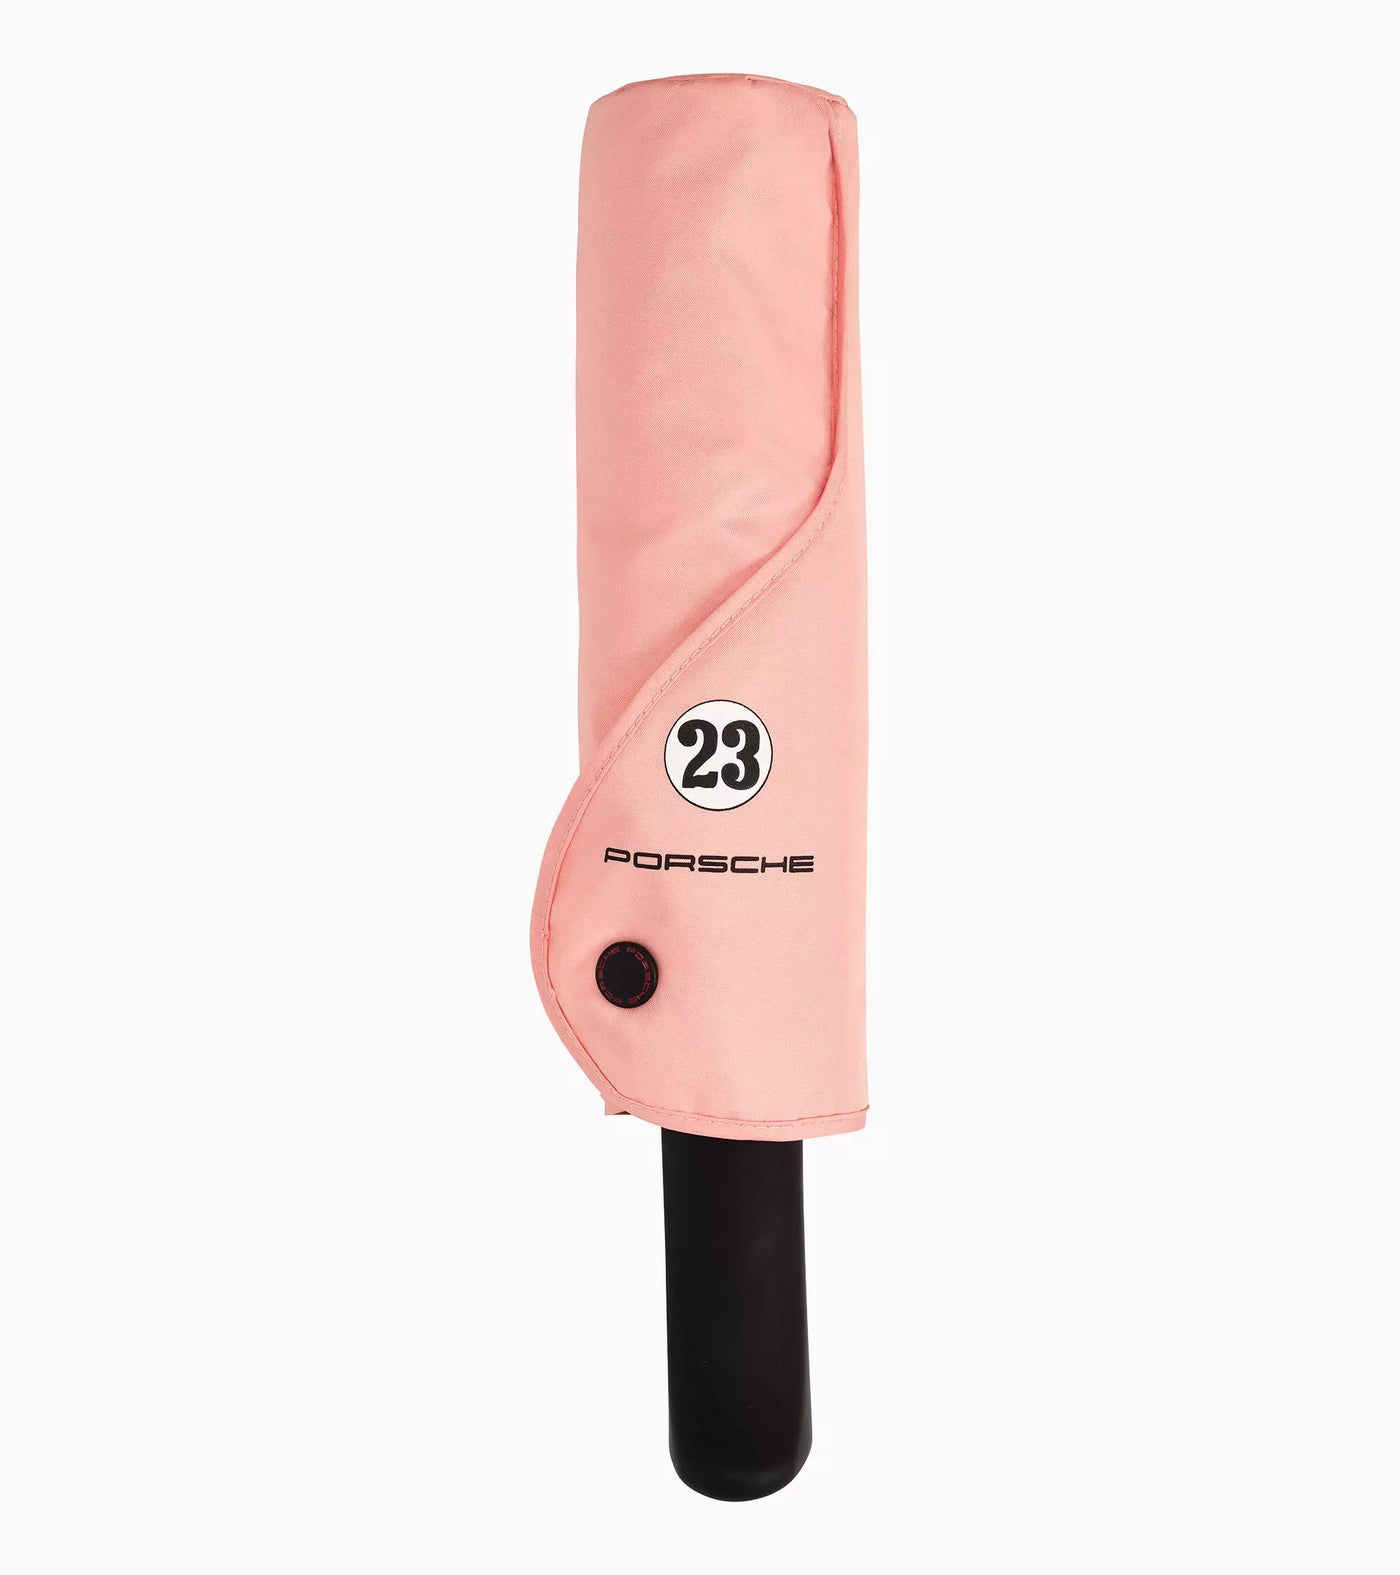 Porsche Umbrella - Pink Pig